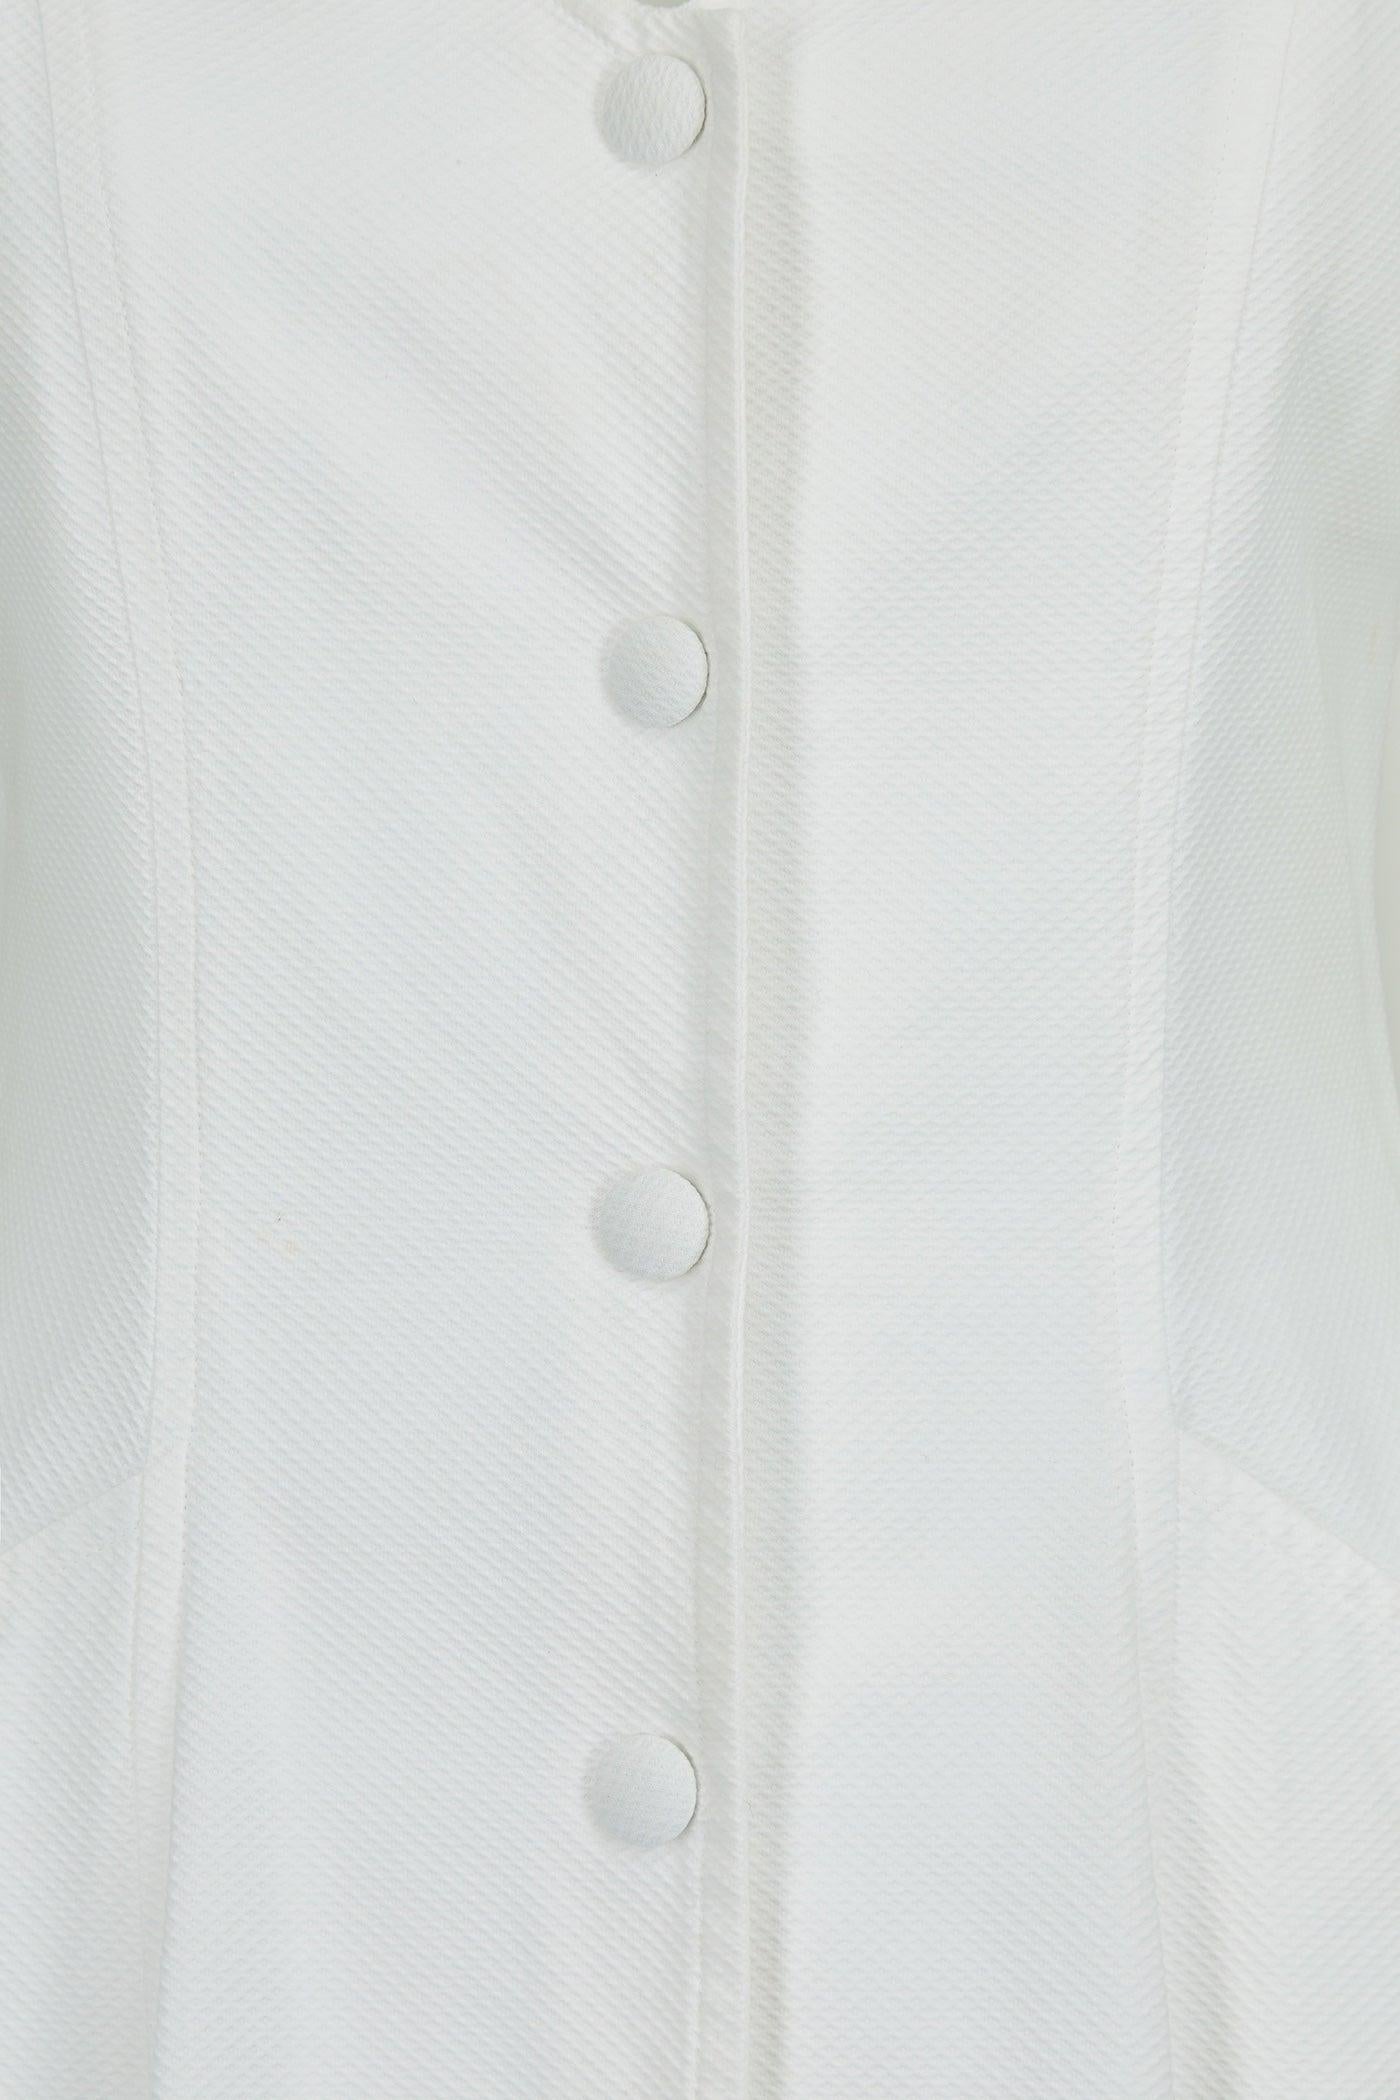 Women's 1990s Catherine Walker Chelsea Design Co White Cotton Dress For Sale